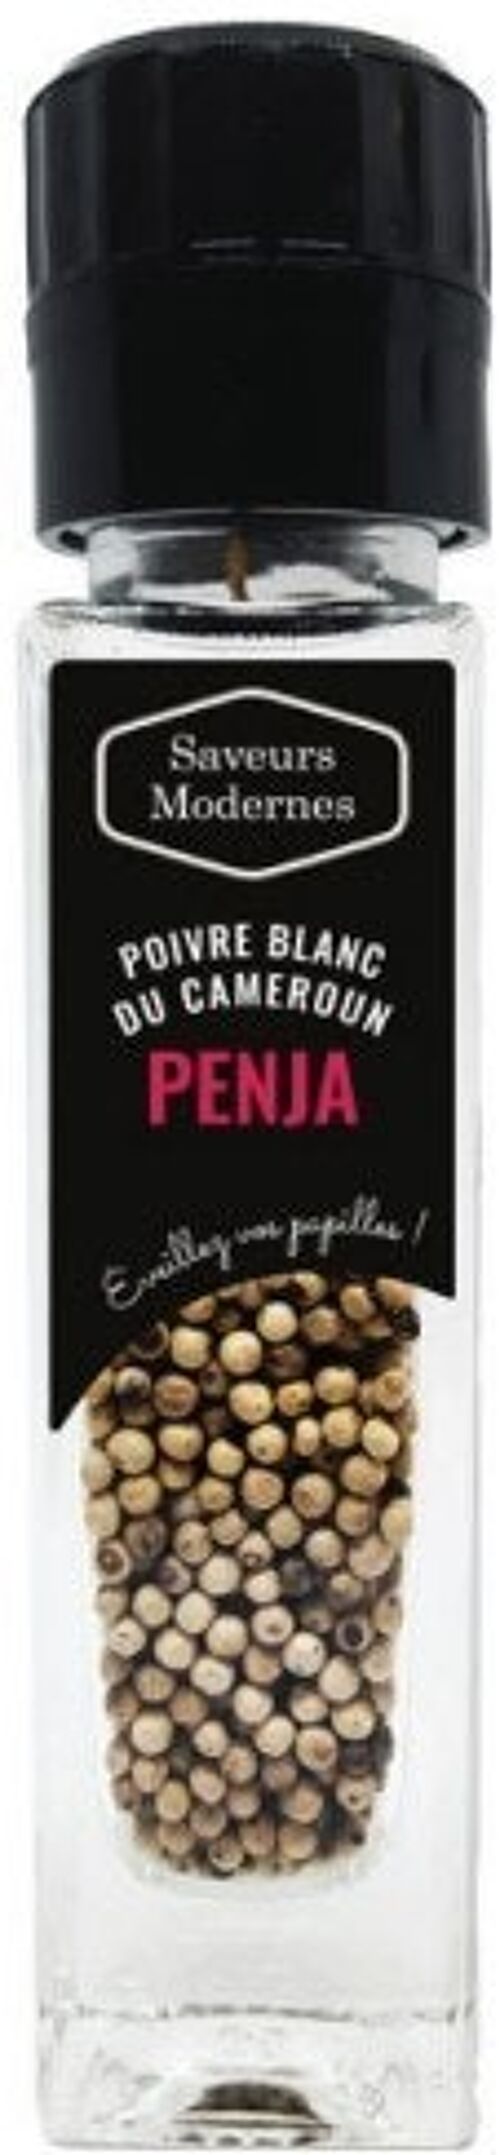 Poivre BLANC Penja du Cameroun, Spices & Vanilla (25 gr.)